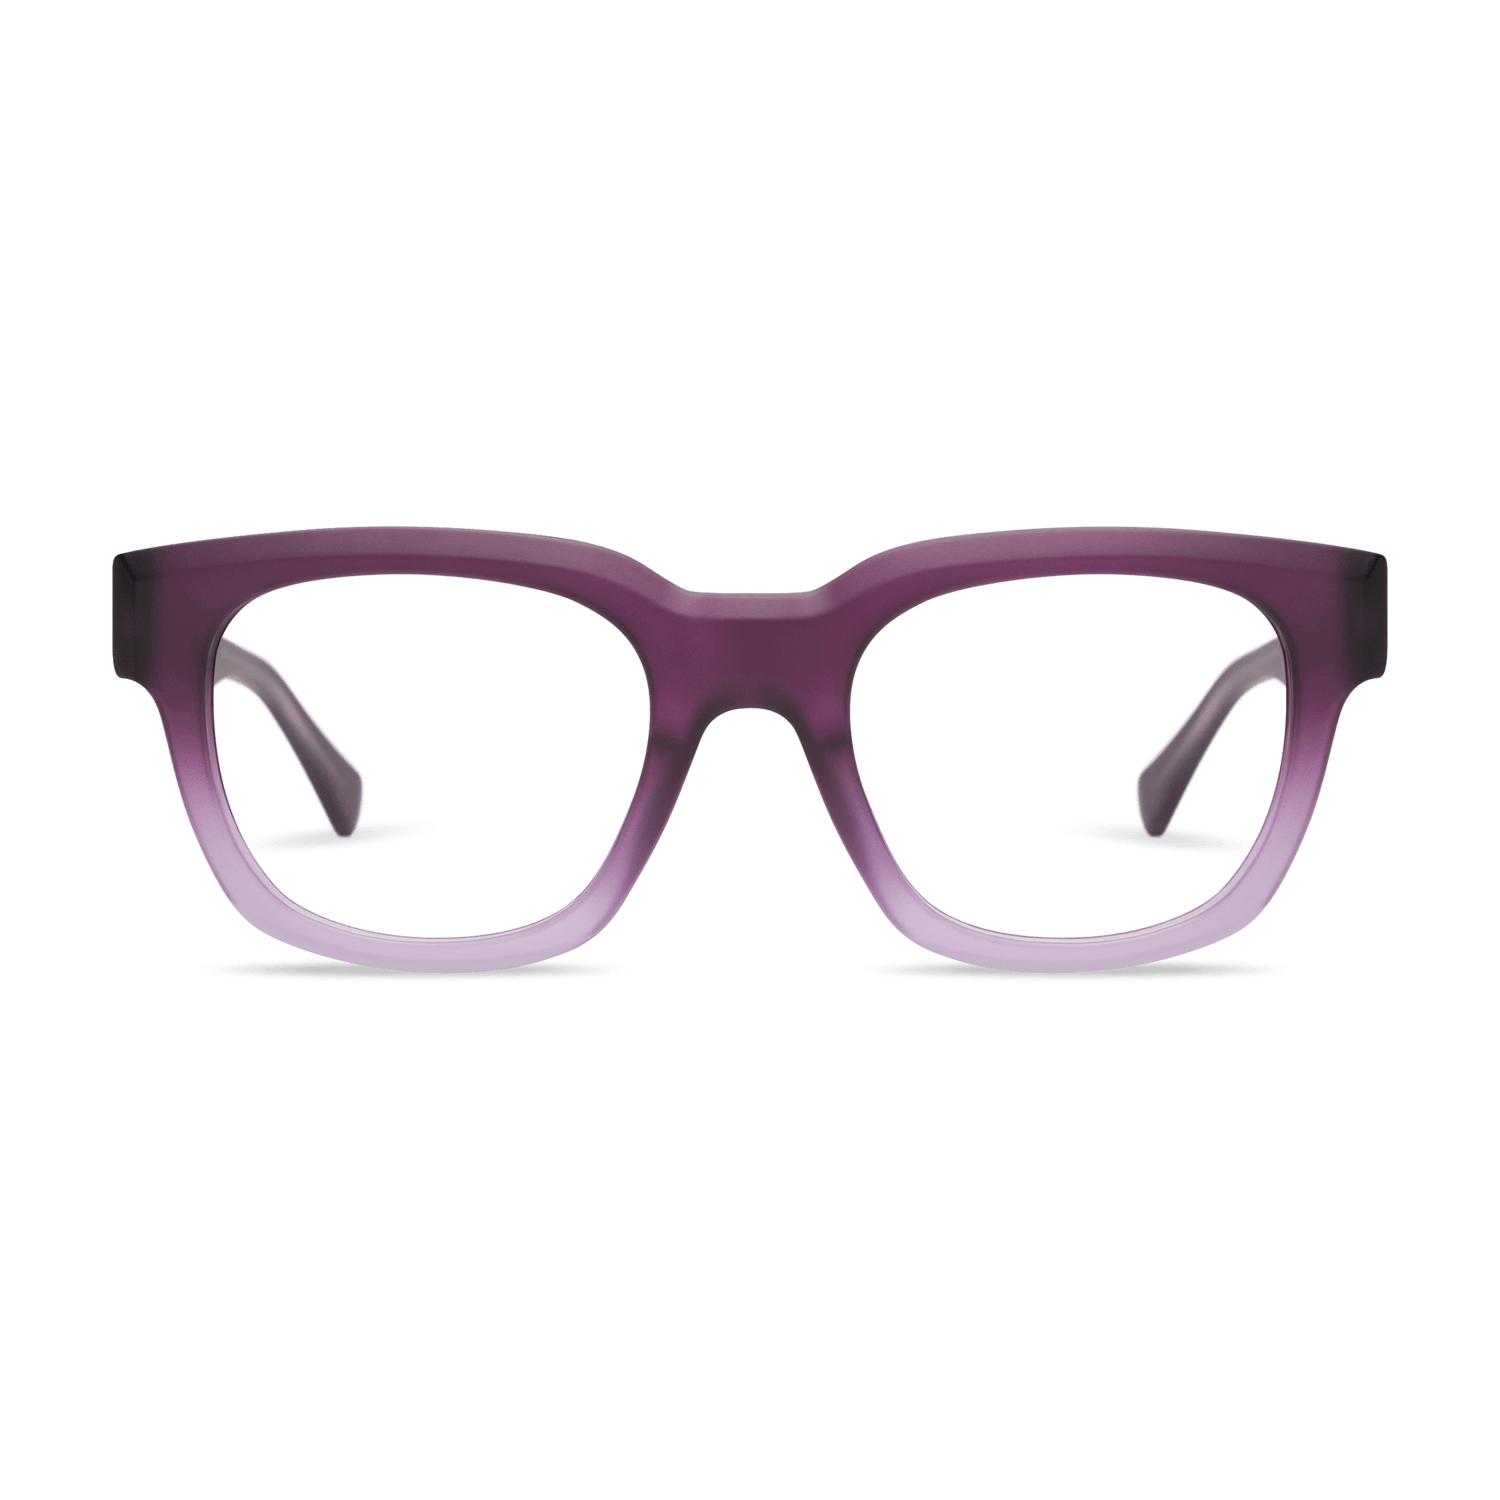 Kaine Readers READING GLASSES LOOK OPTIC Purple Gradient +1.00 